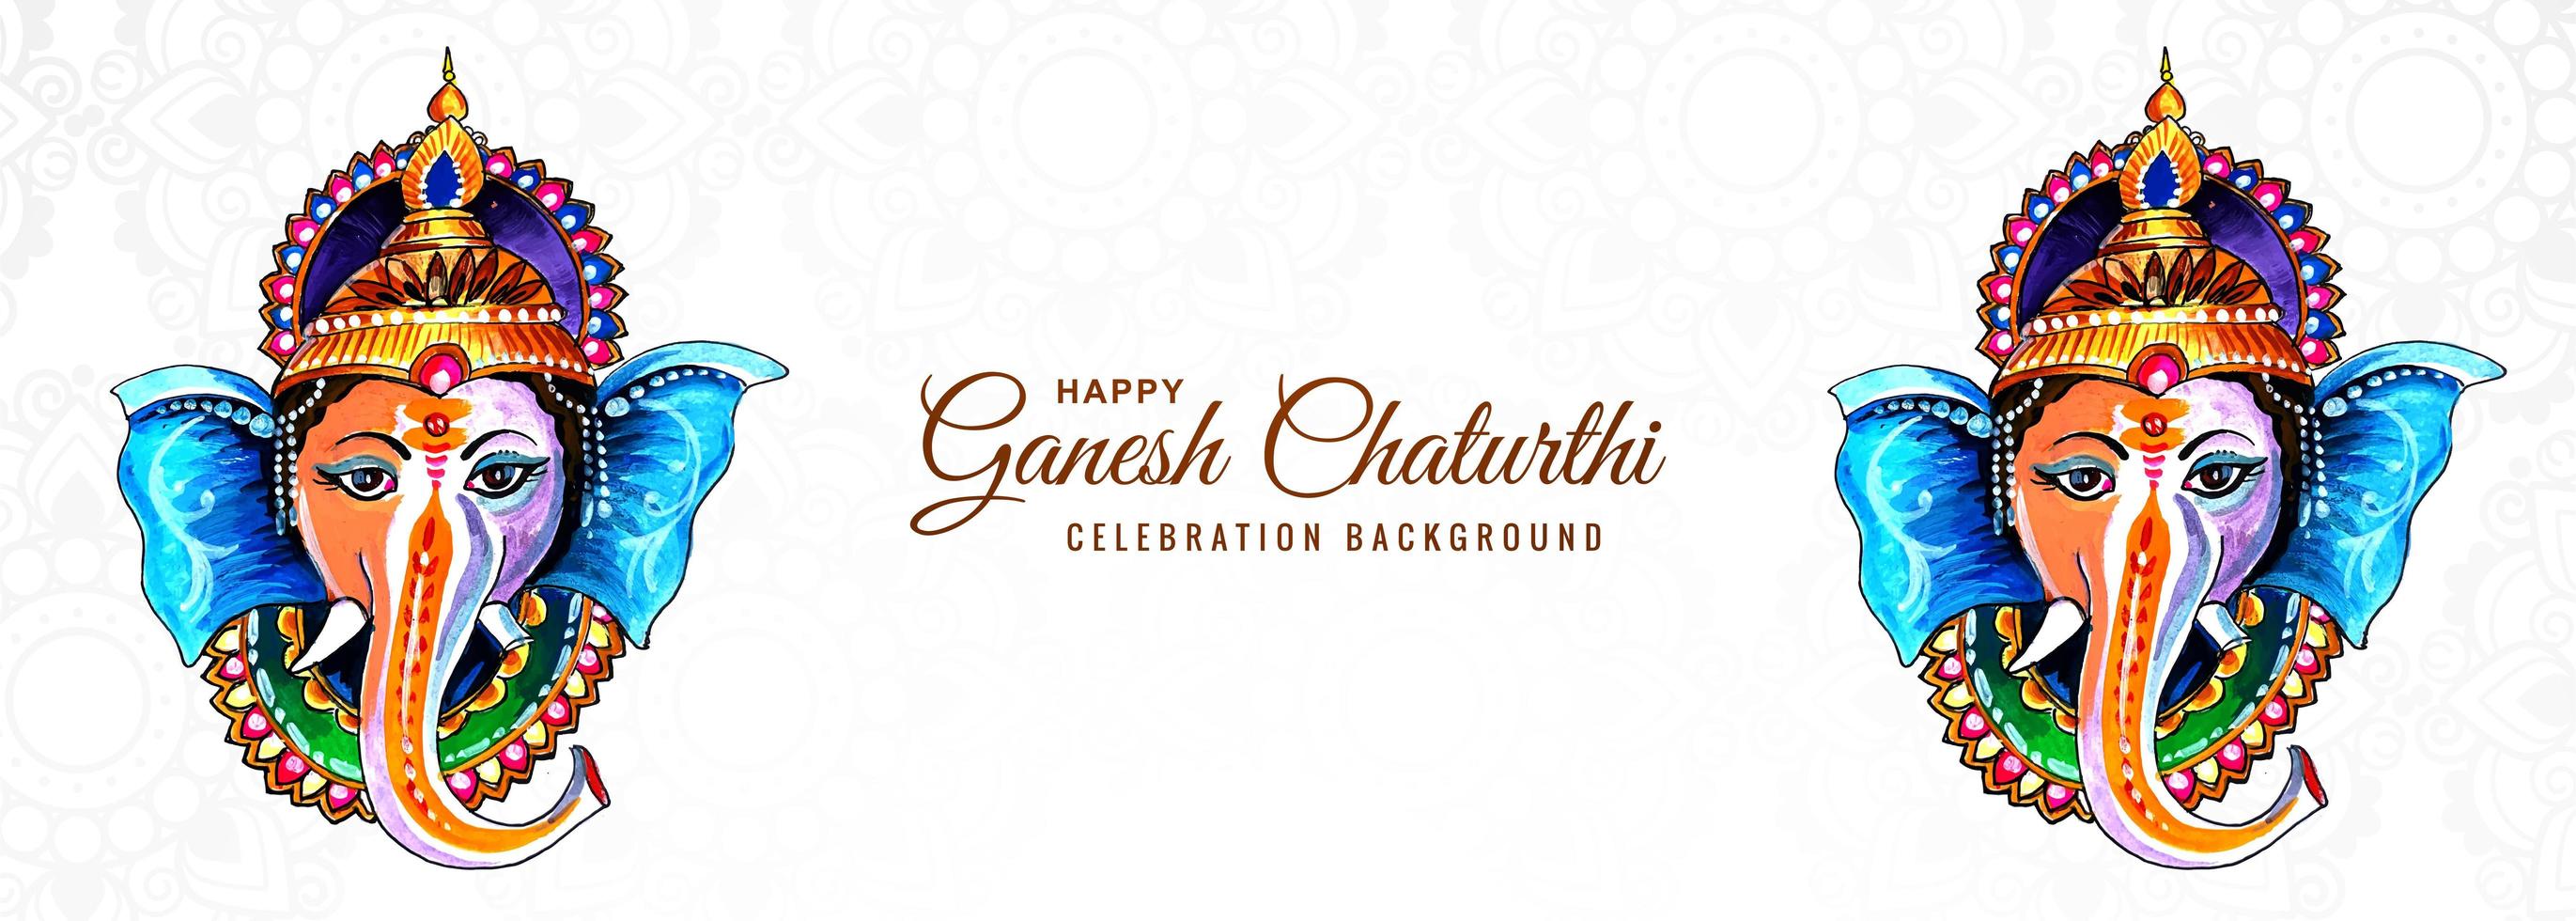 hindoe-god ganesha voor happy ganesh chaturthi festival banner vector